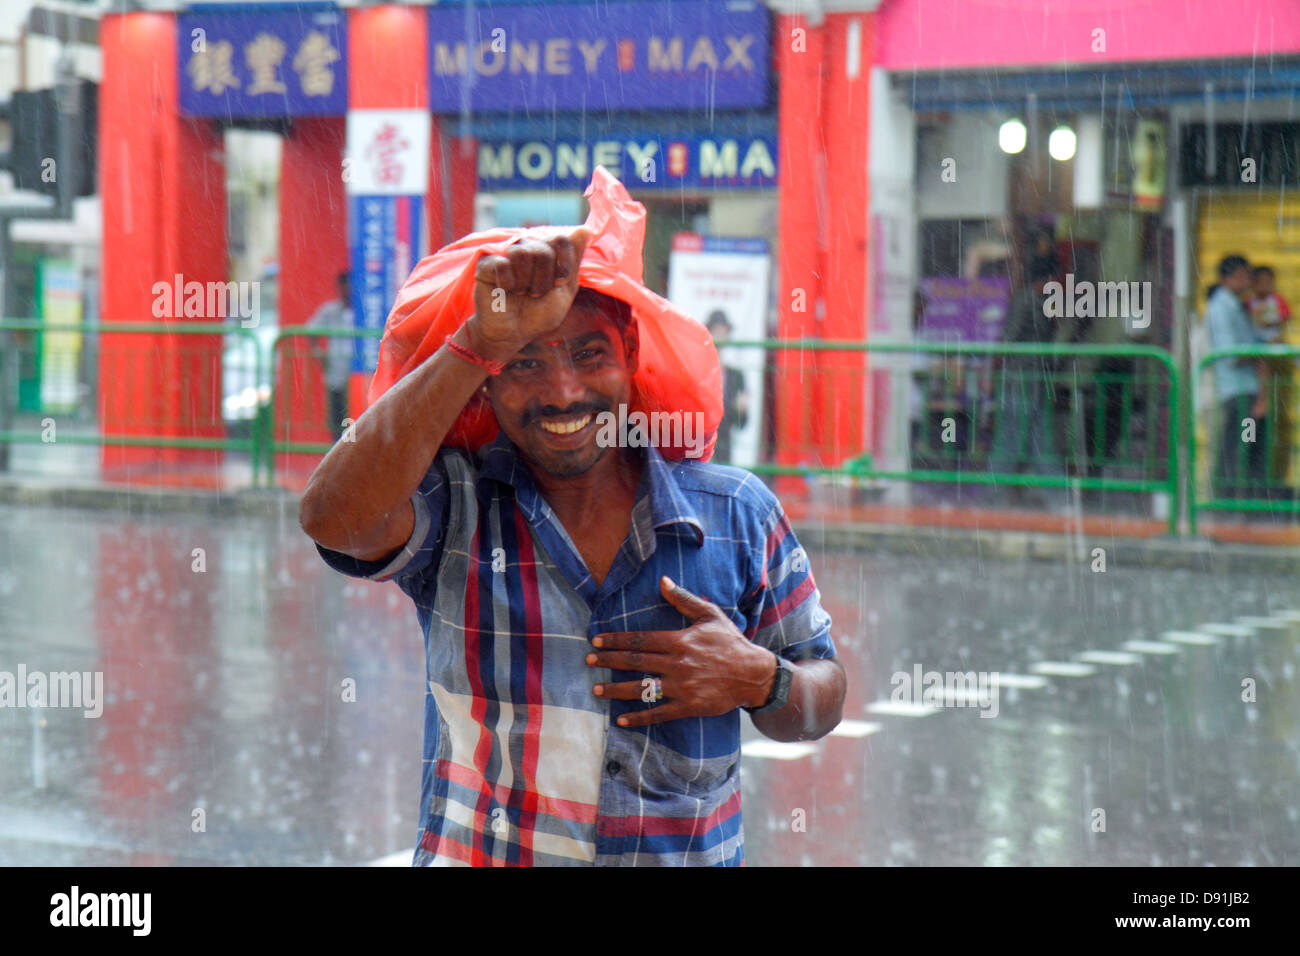 Singapore Little India,Serangoon Road,Asian man men male,running,rain,raining,weather,climate,monsoon,over,head,covering,Sing130203088 Stock Photo